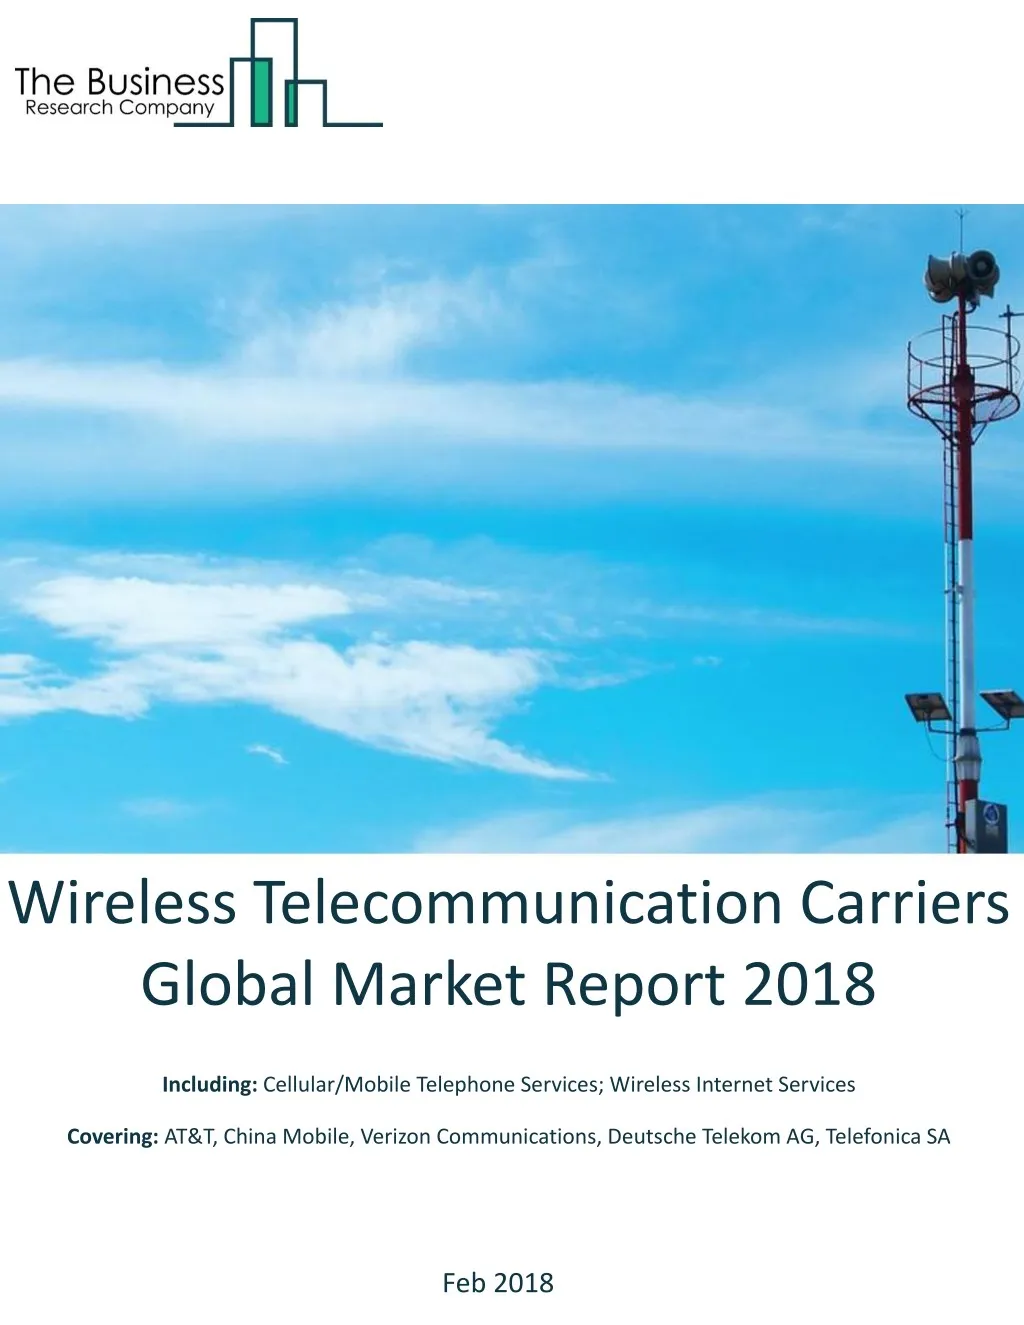 wireless telecommunication carriers global market